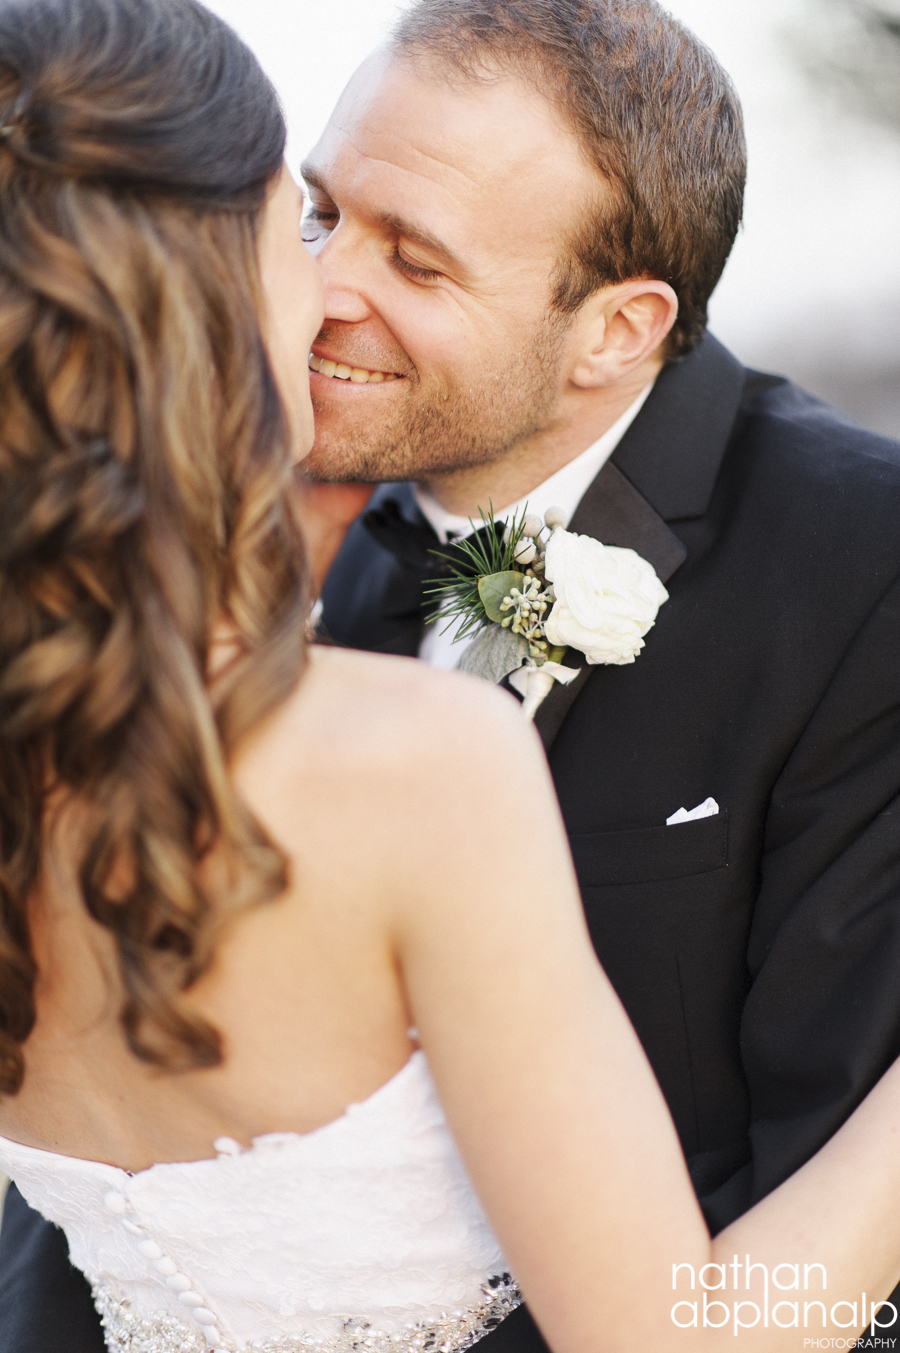 Charlotte Wedding Photographer - Nathan Abplanalp Photography (1)